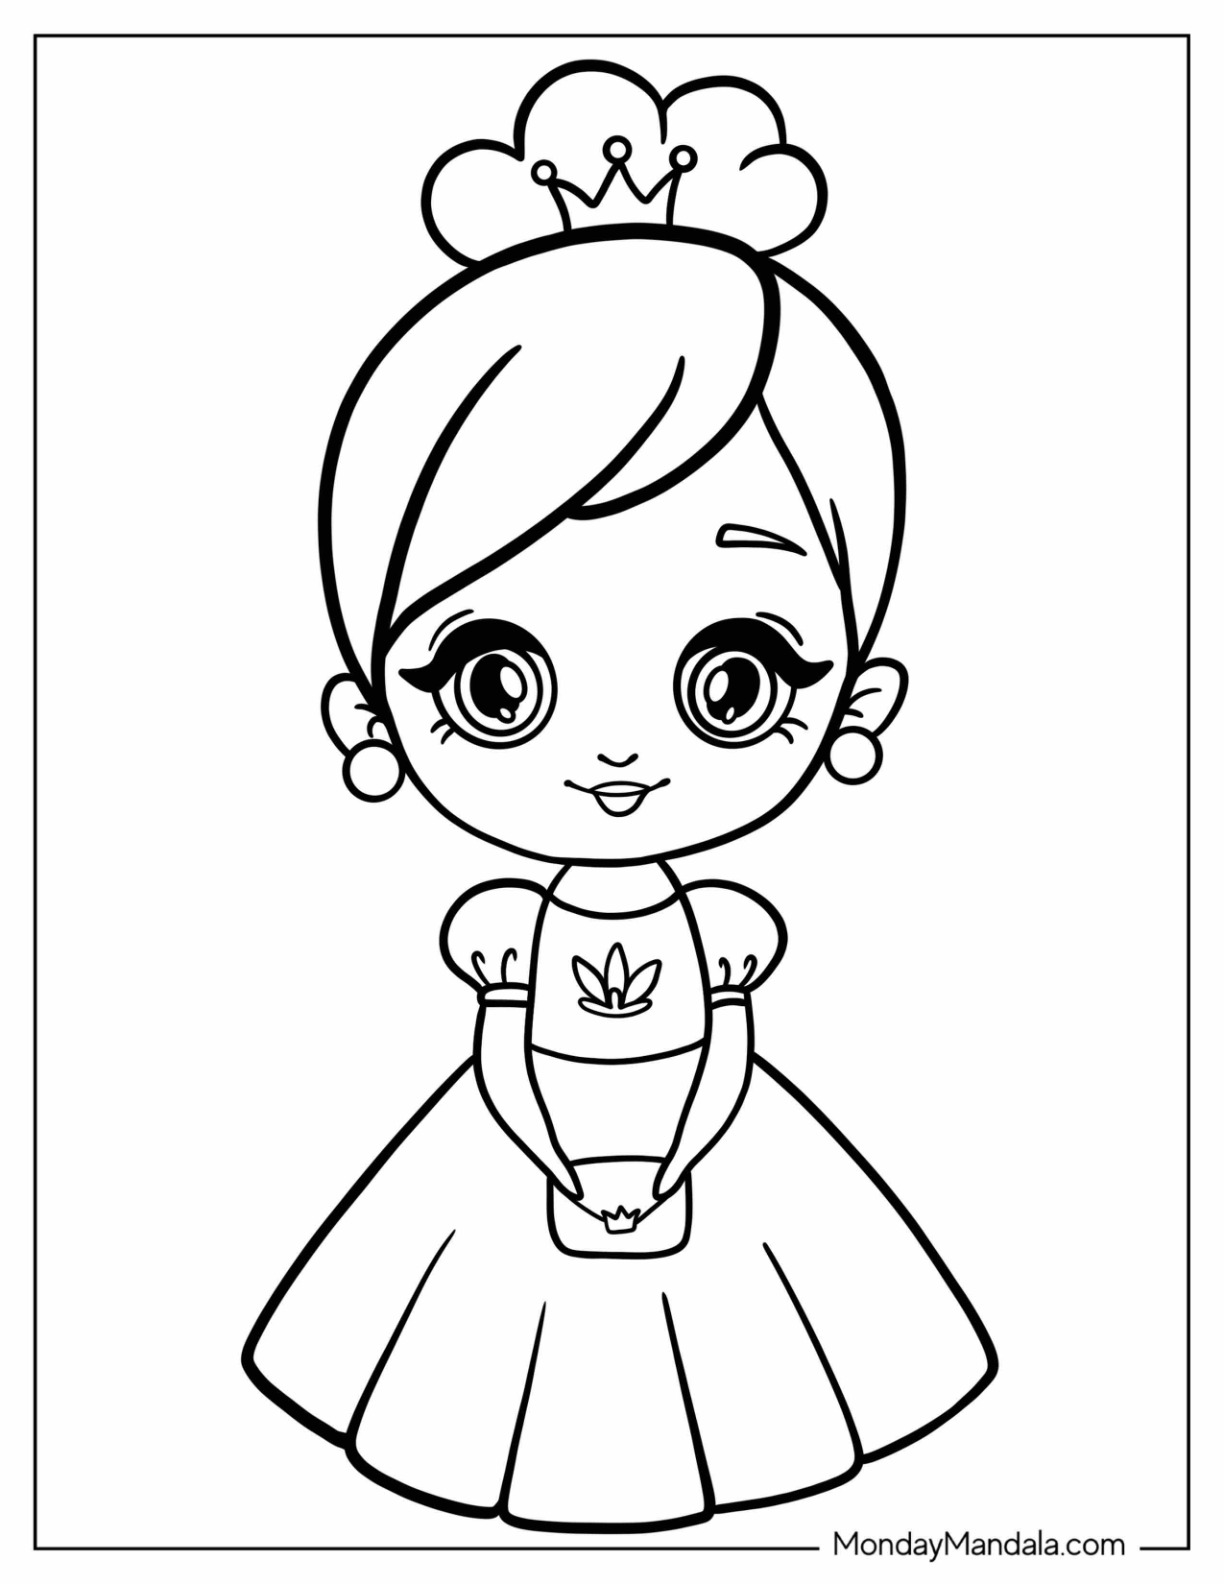 Princess coloring pages free pdf printables